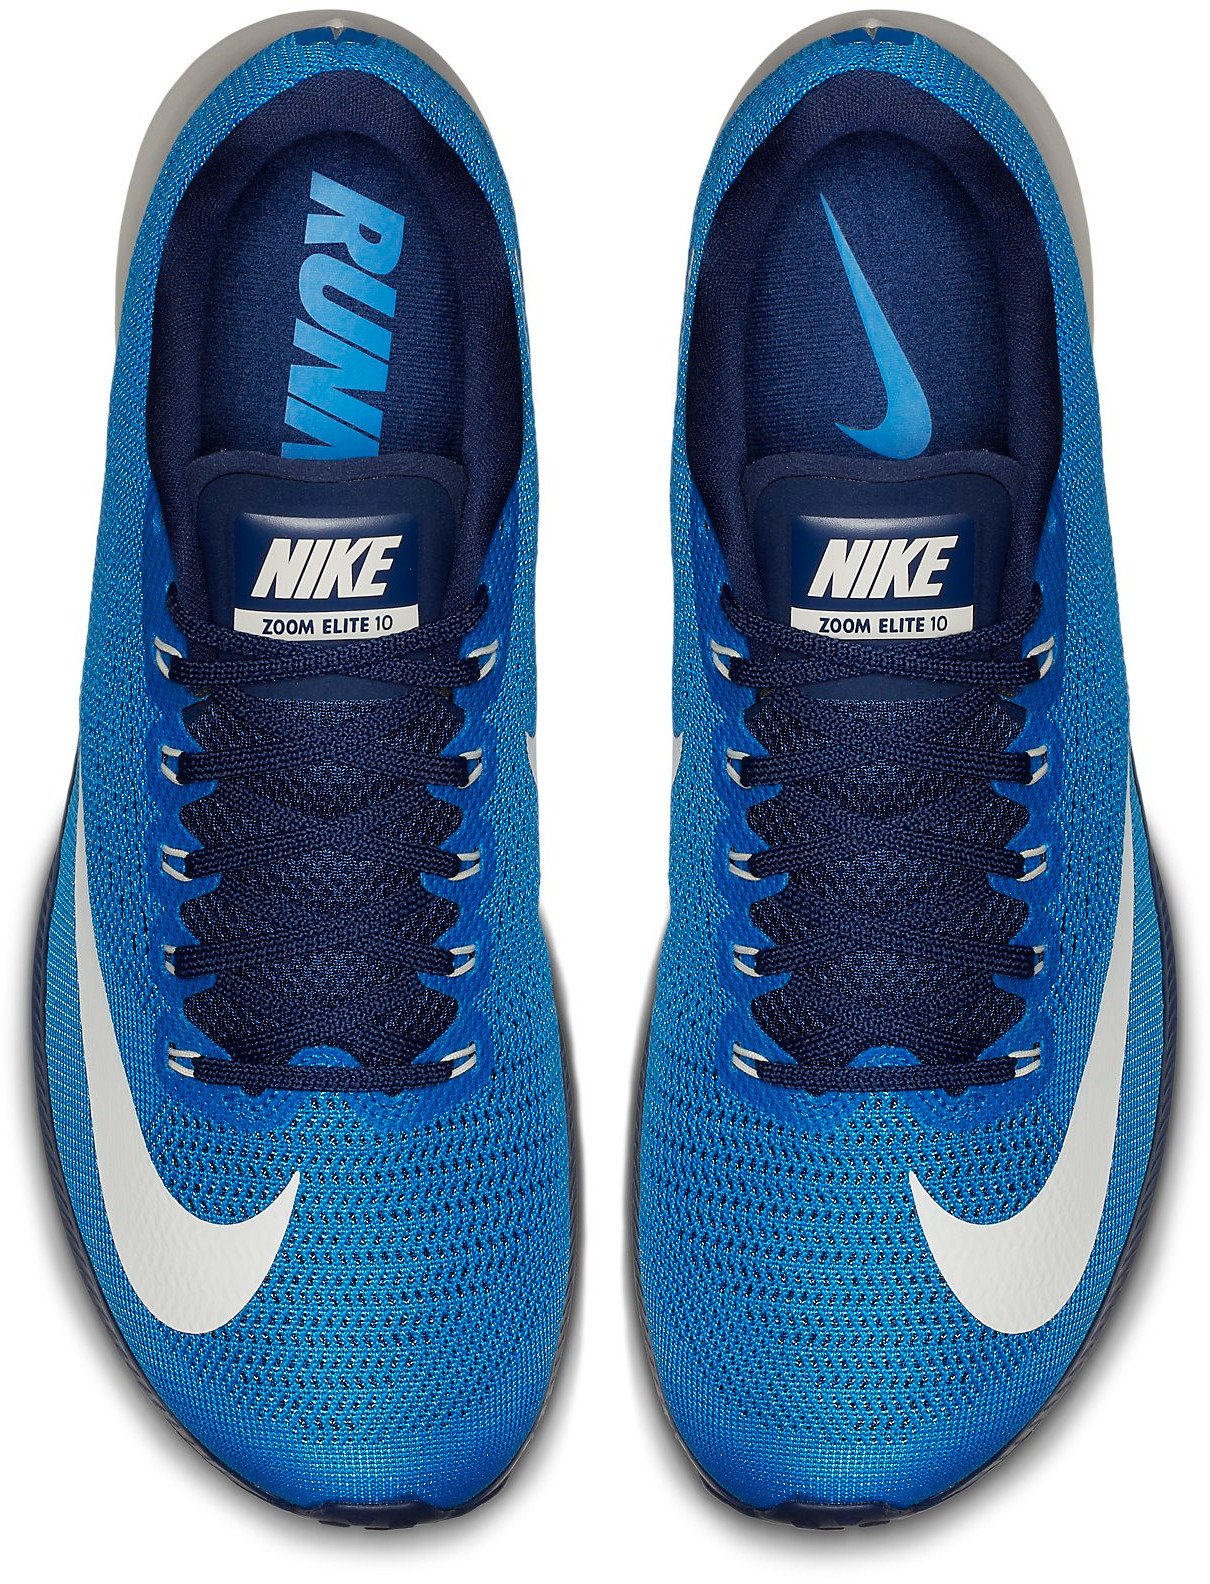 niet voldoende Broek voorkomen Running shoes Nike AIR ZOOM ELITE 10 - Top4Running.com